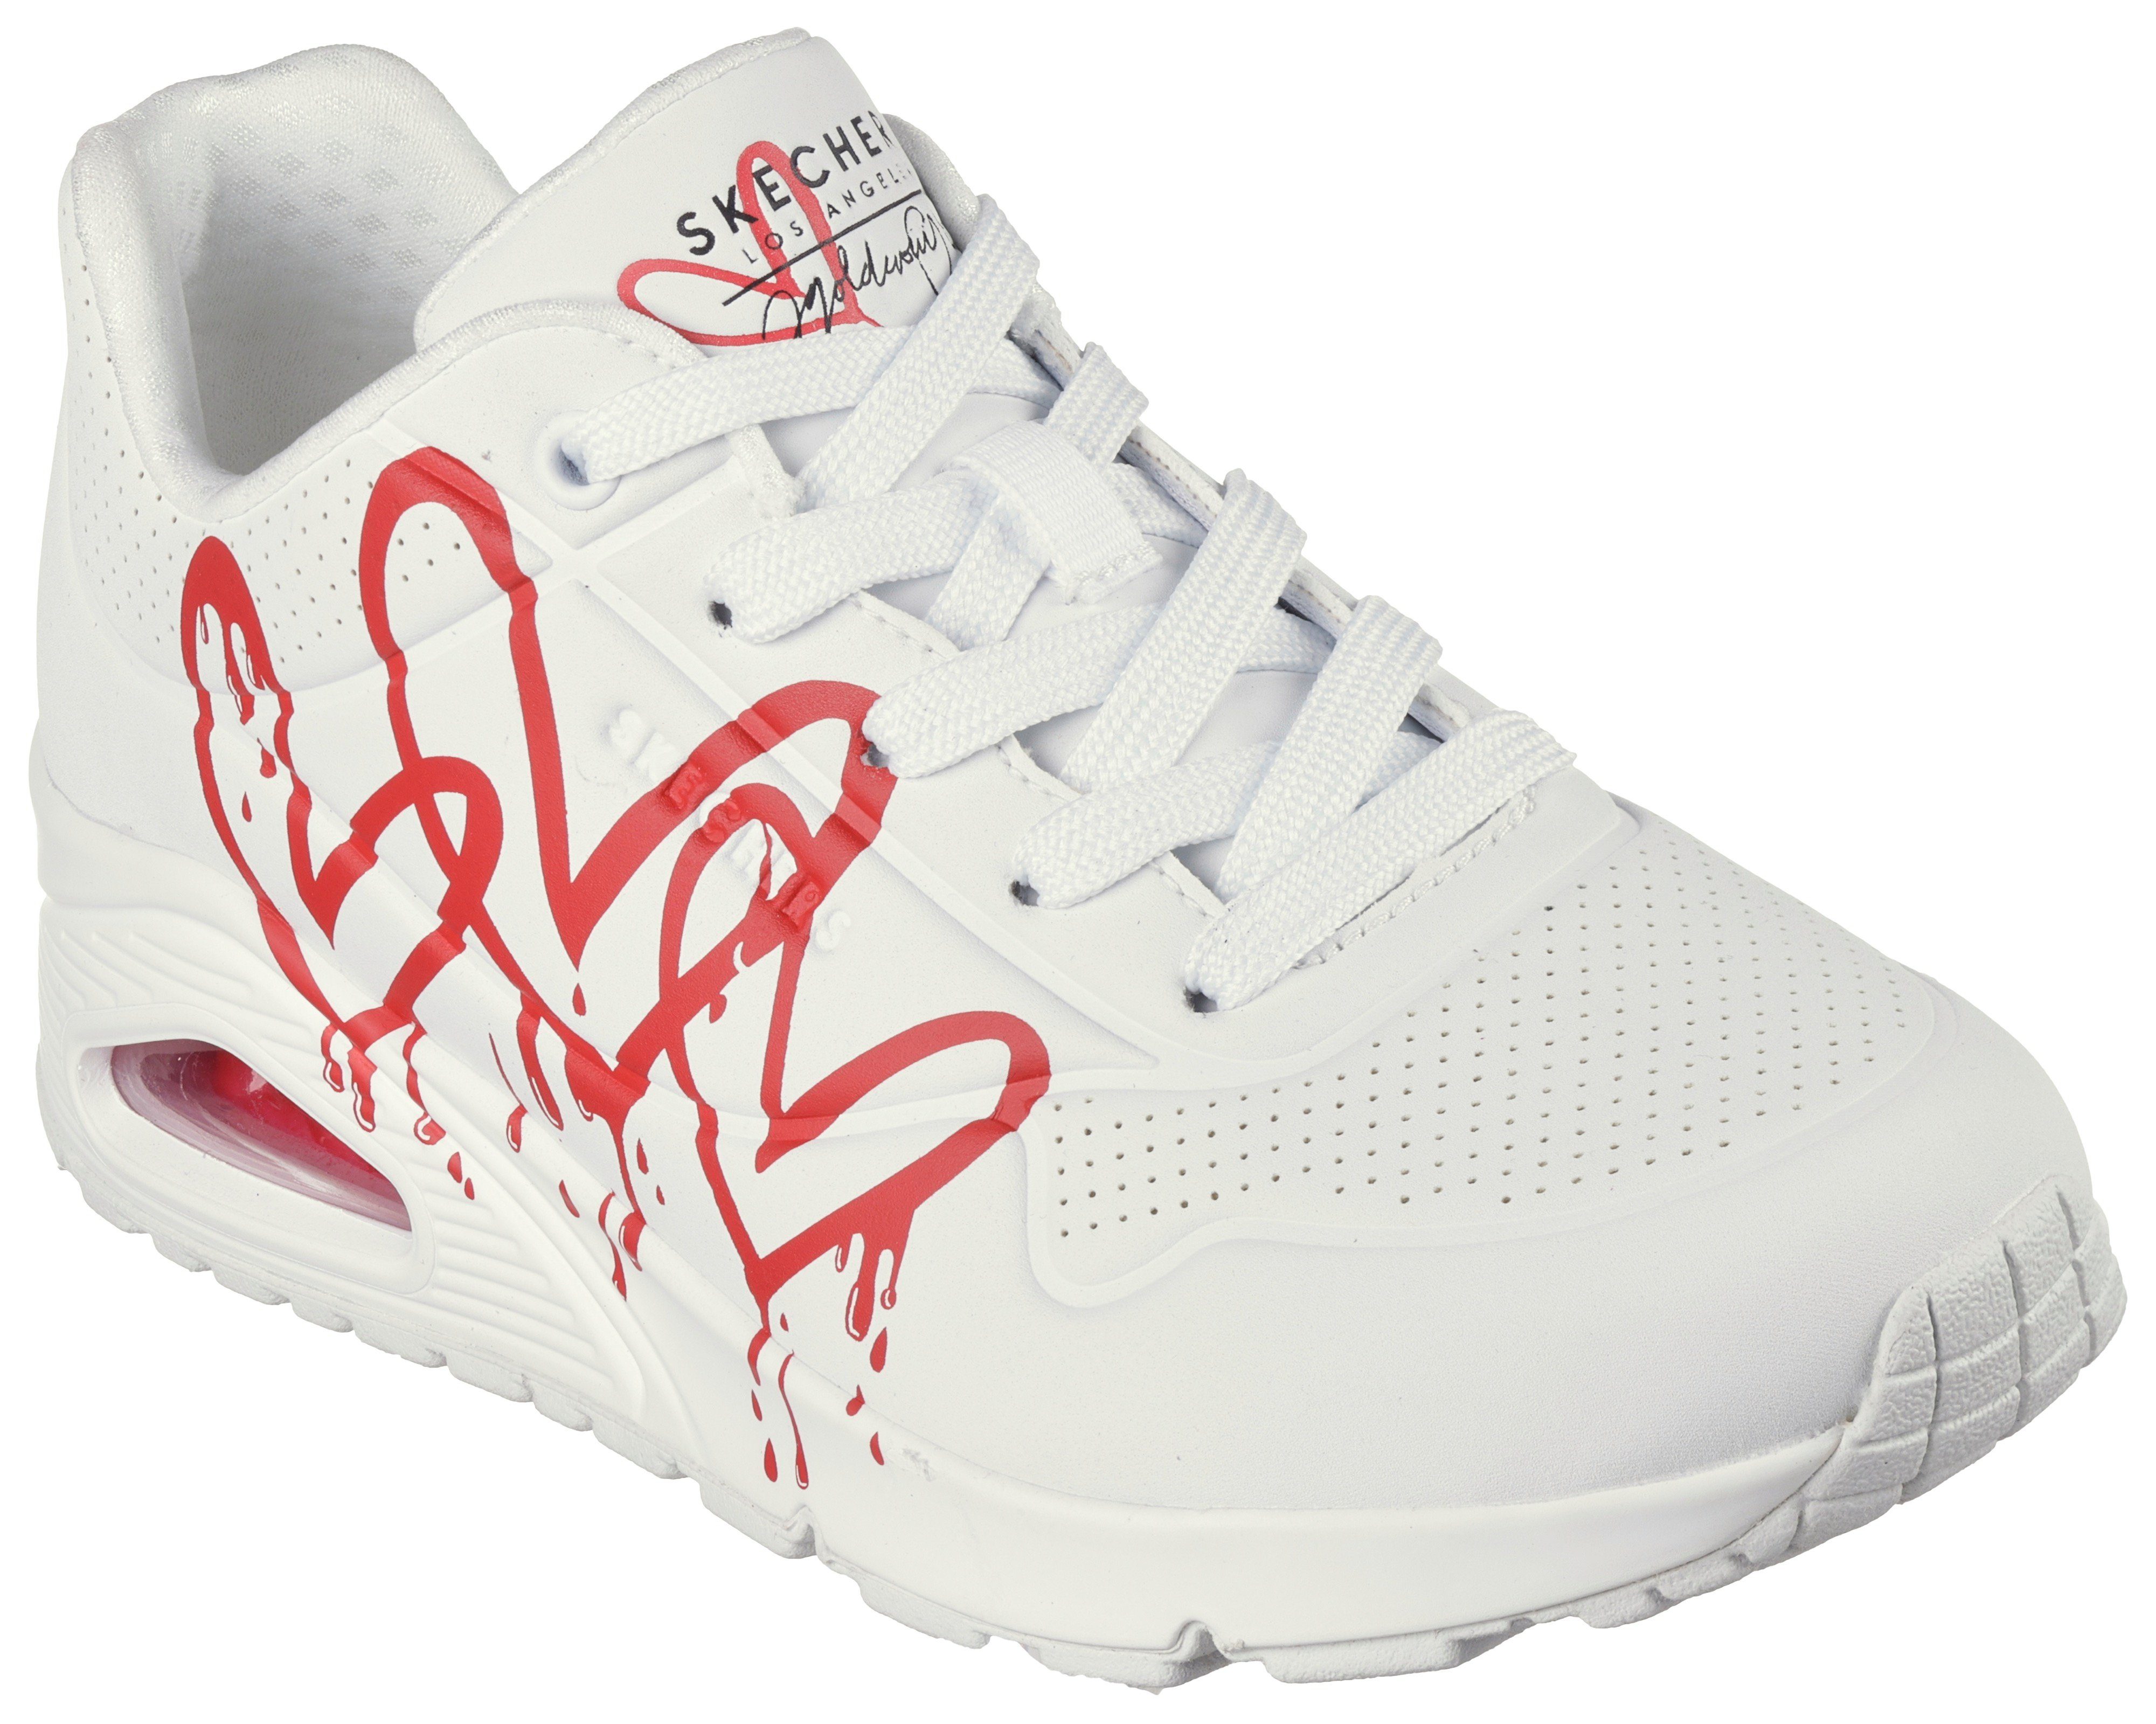 Sneaker IN weiß-rot LOVE UNO mit Skechers Herzen-Graffity-Print DRIPPING